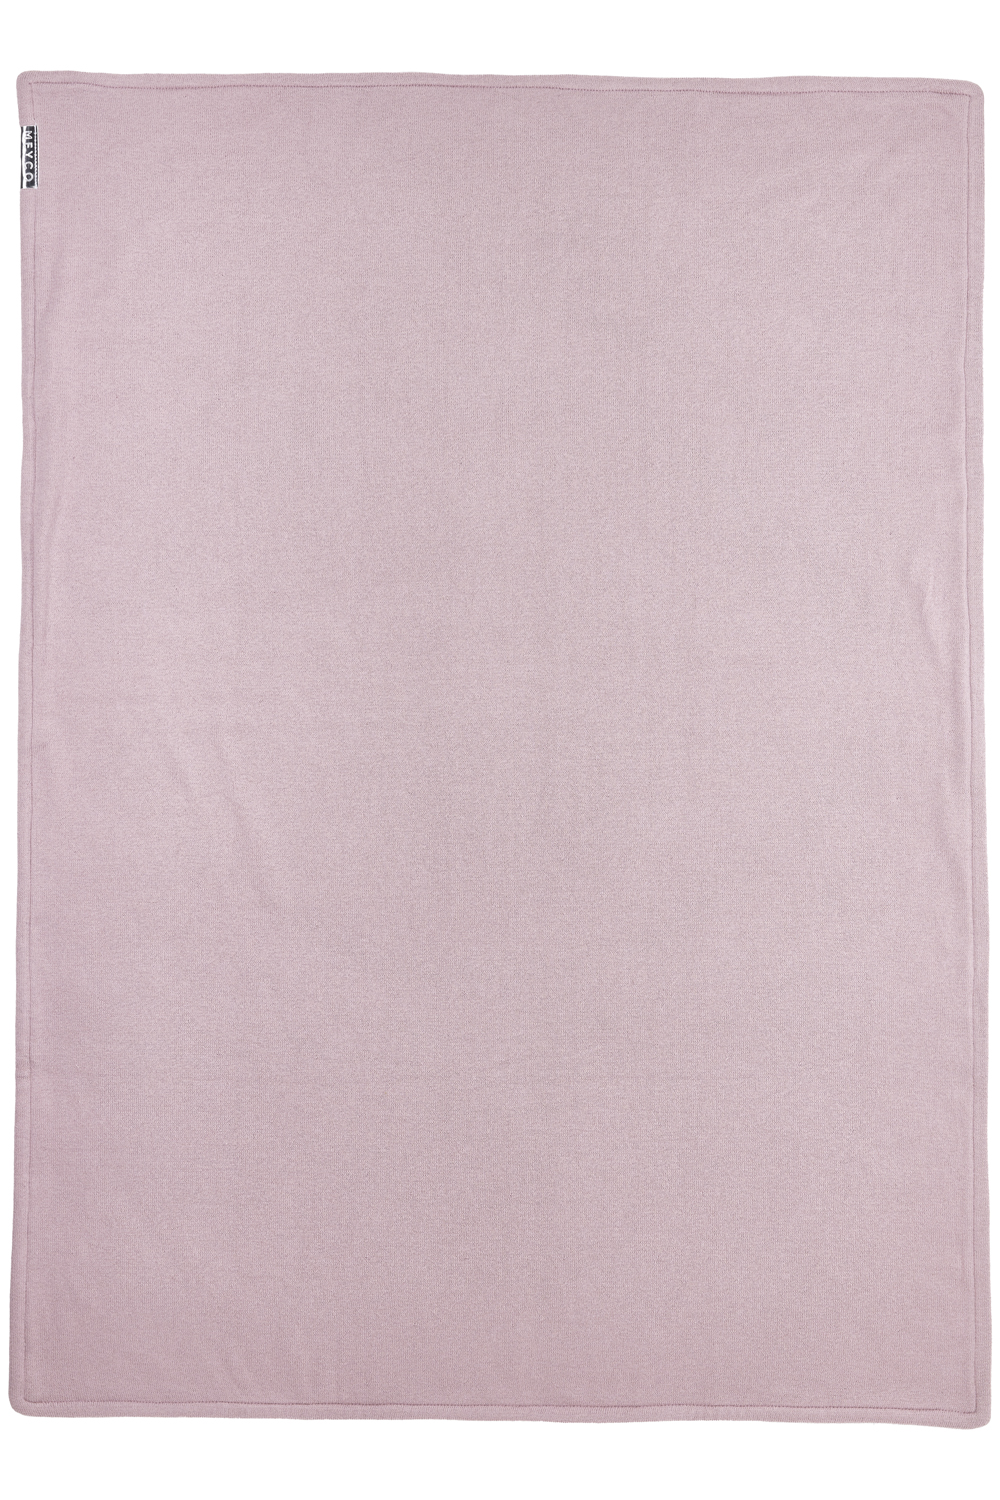 Wiegdeken Knit Basic velvet - lilac - 75x100cm